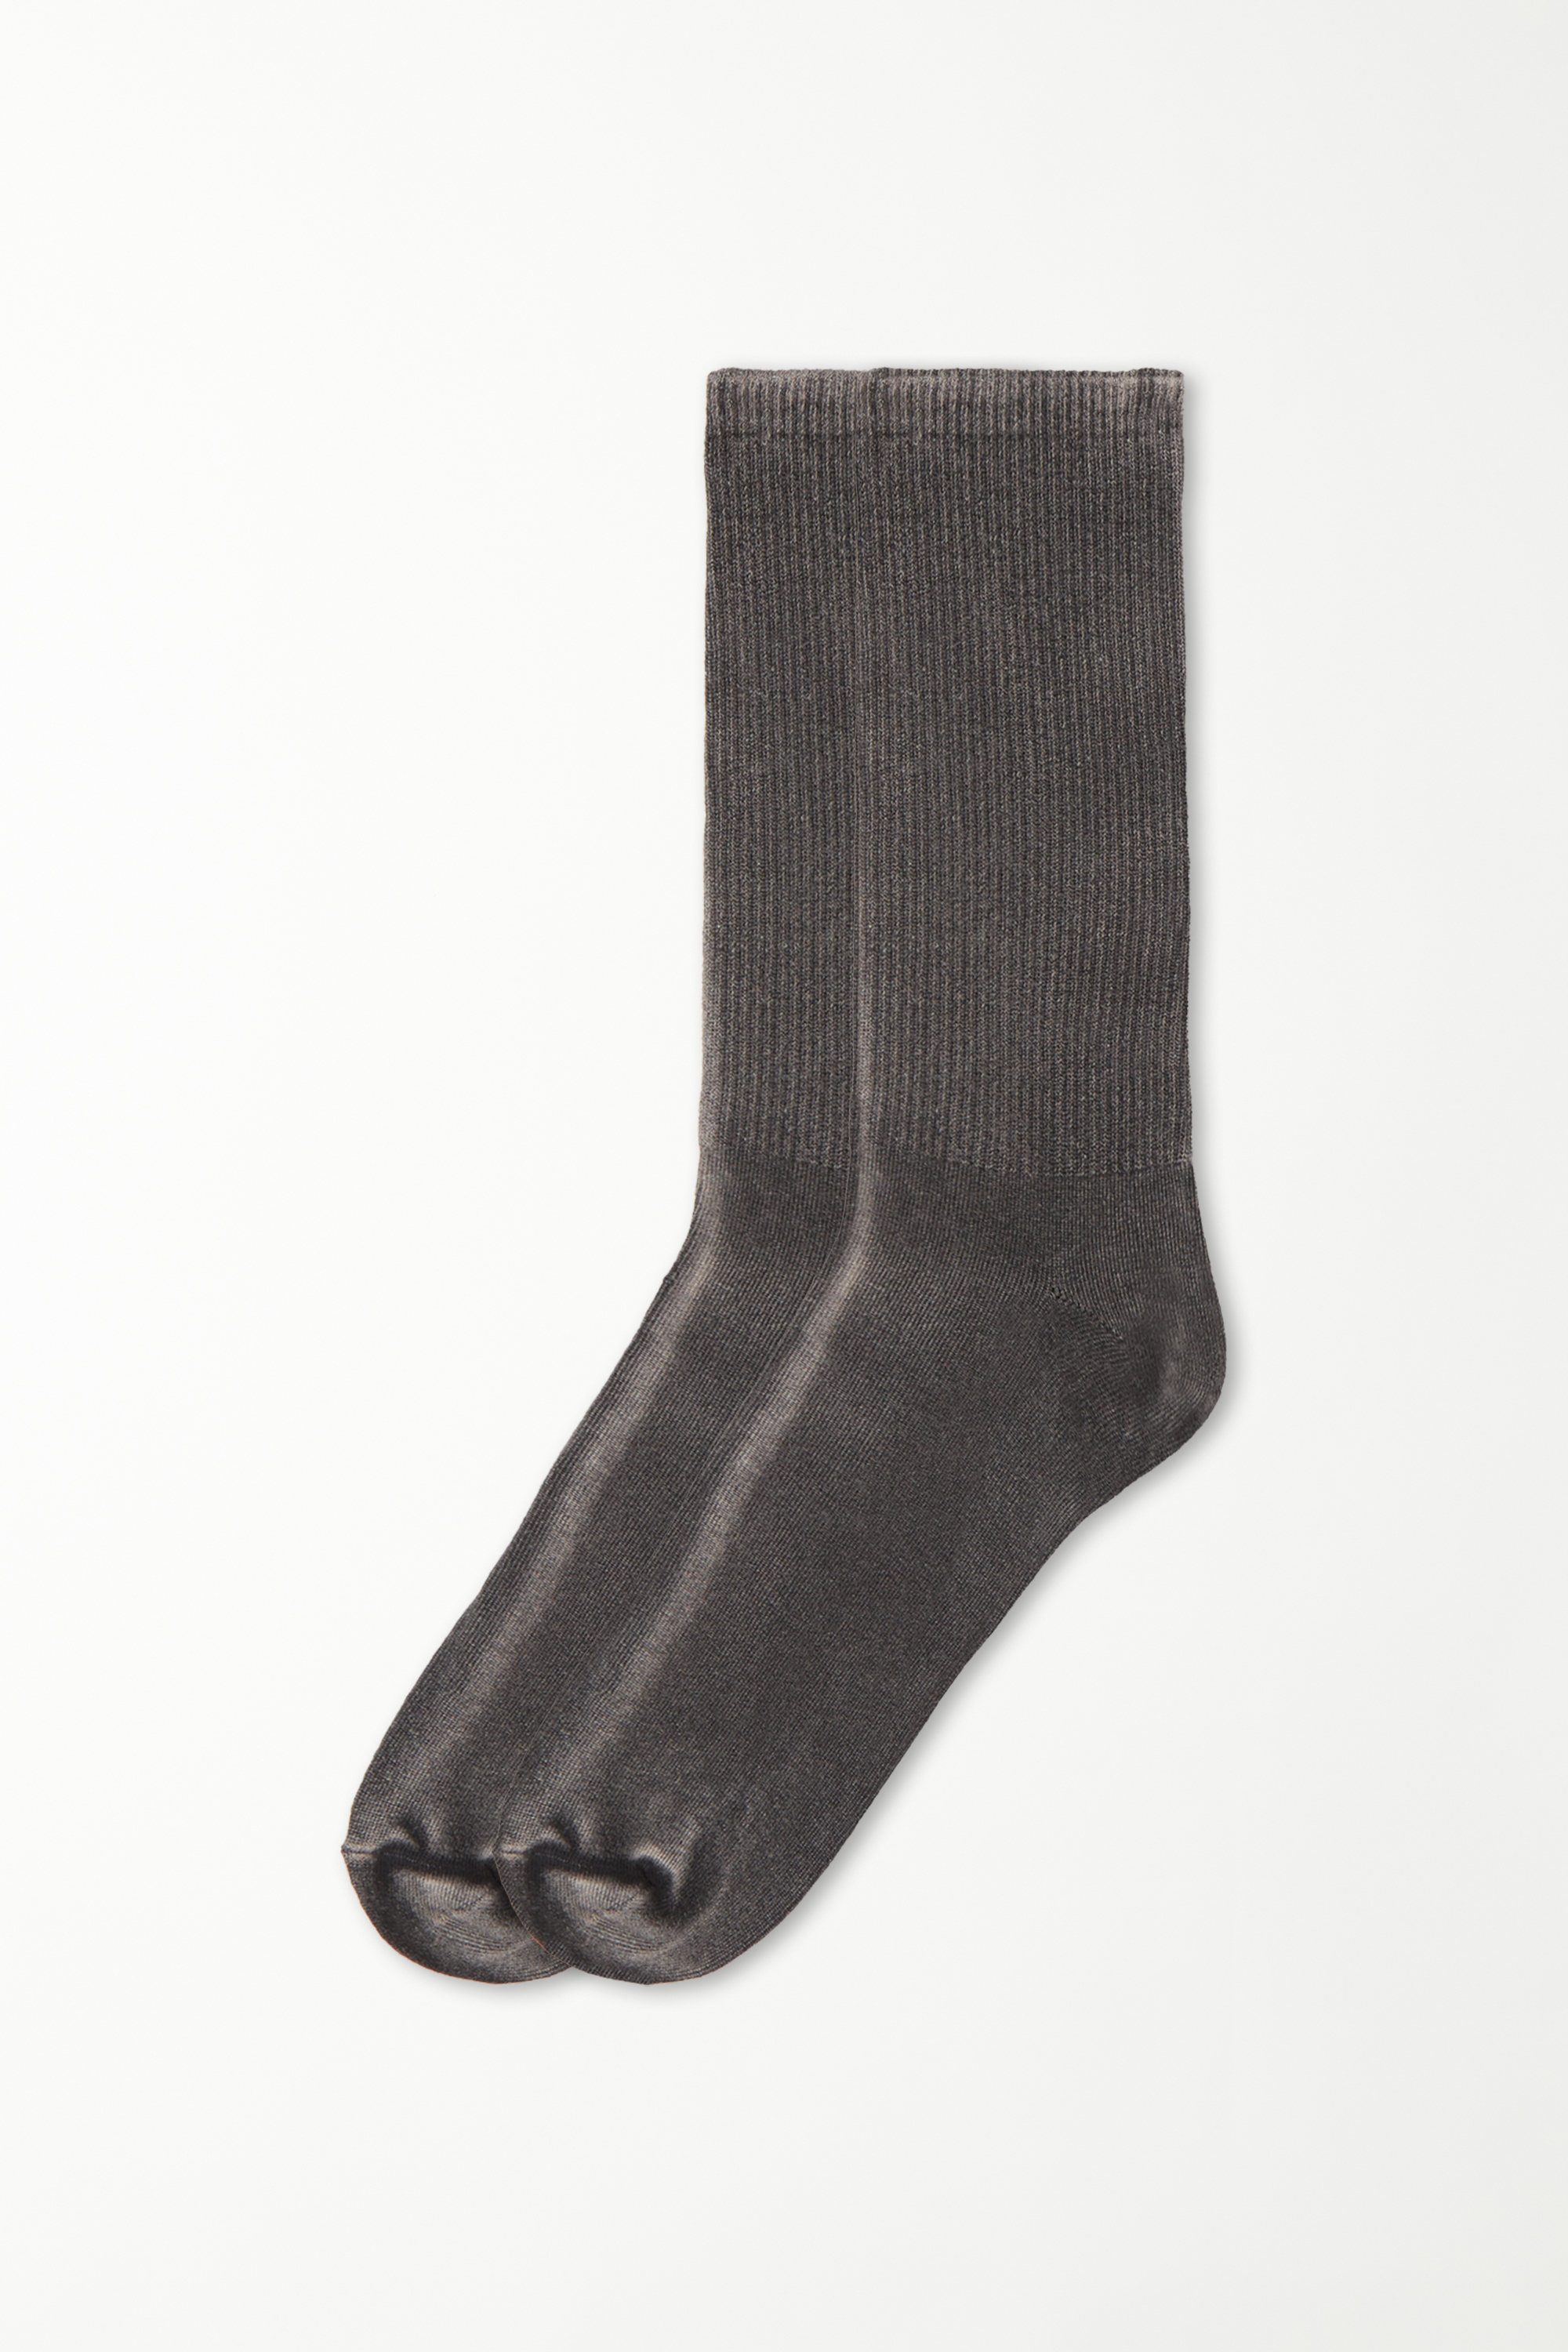 Men’s Patterned Cotton Crew Socks